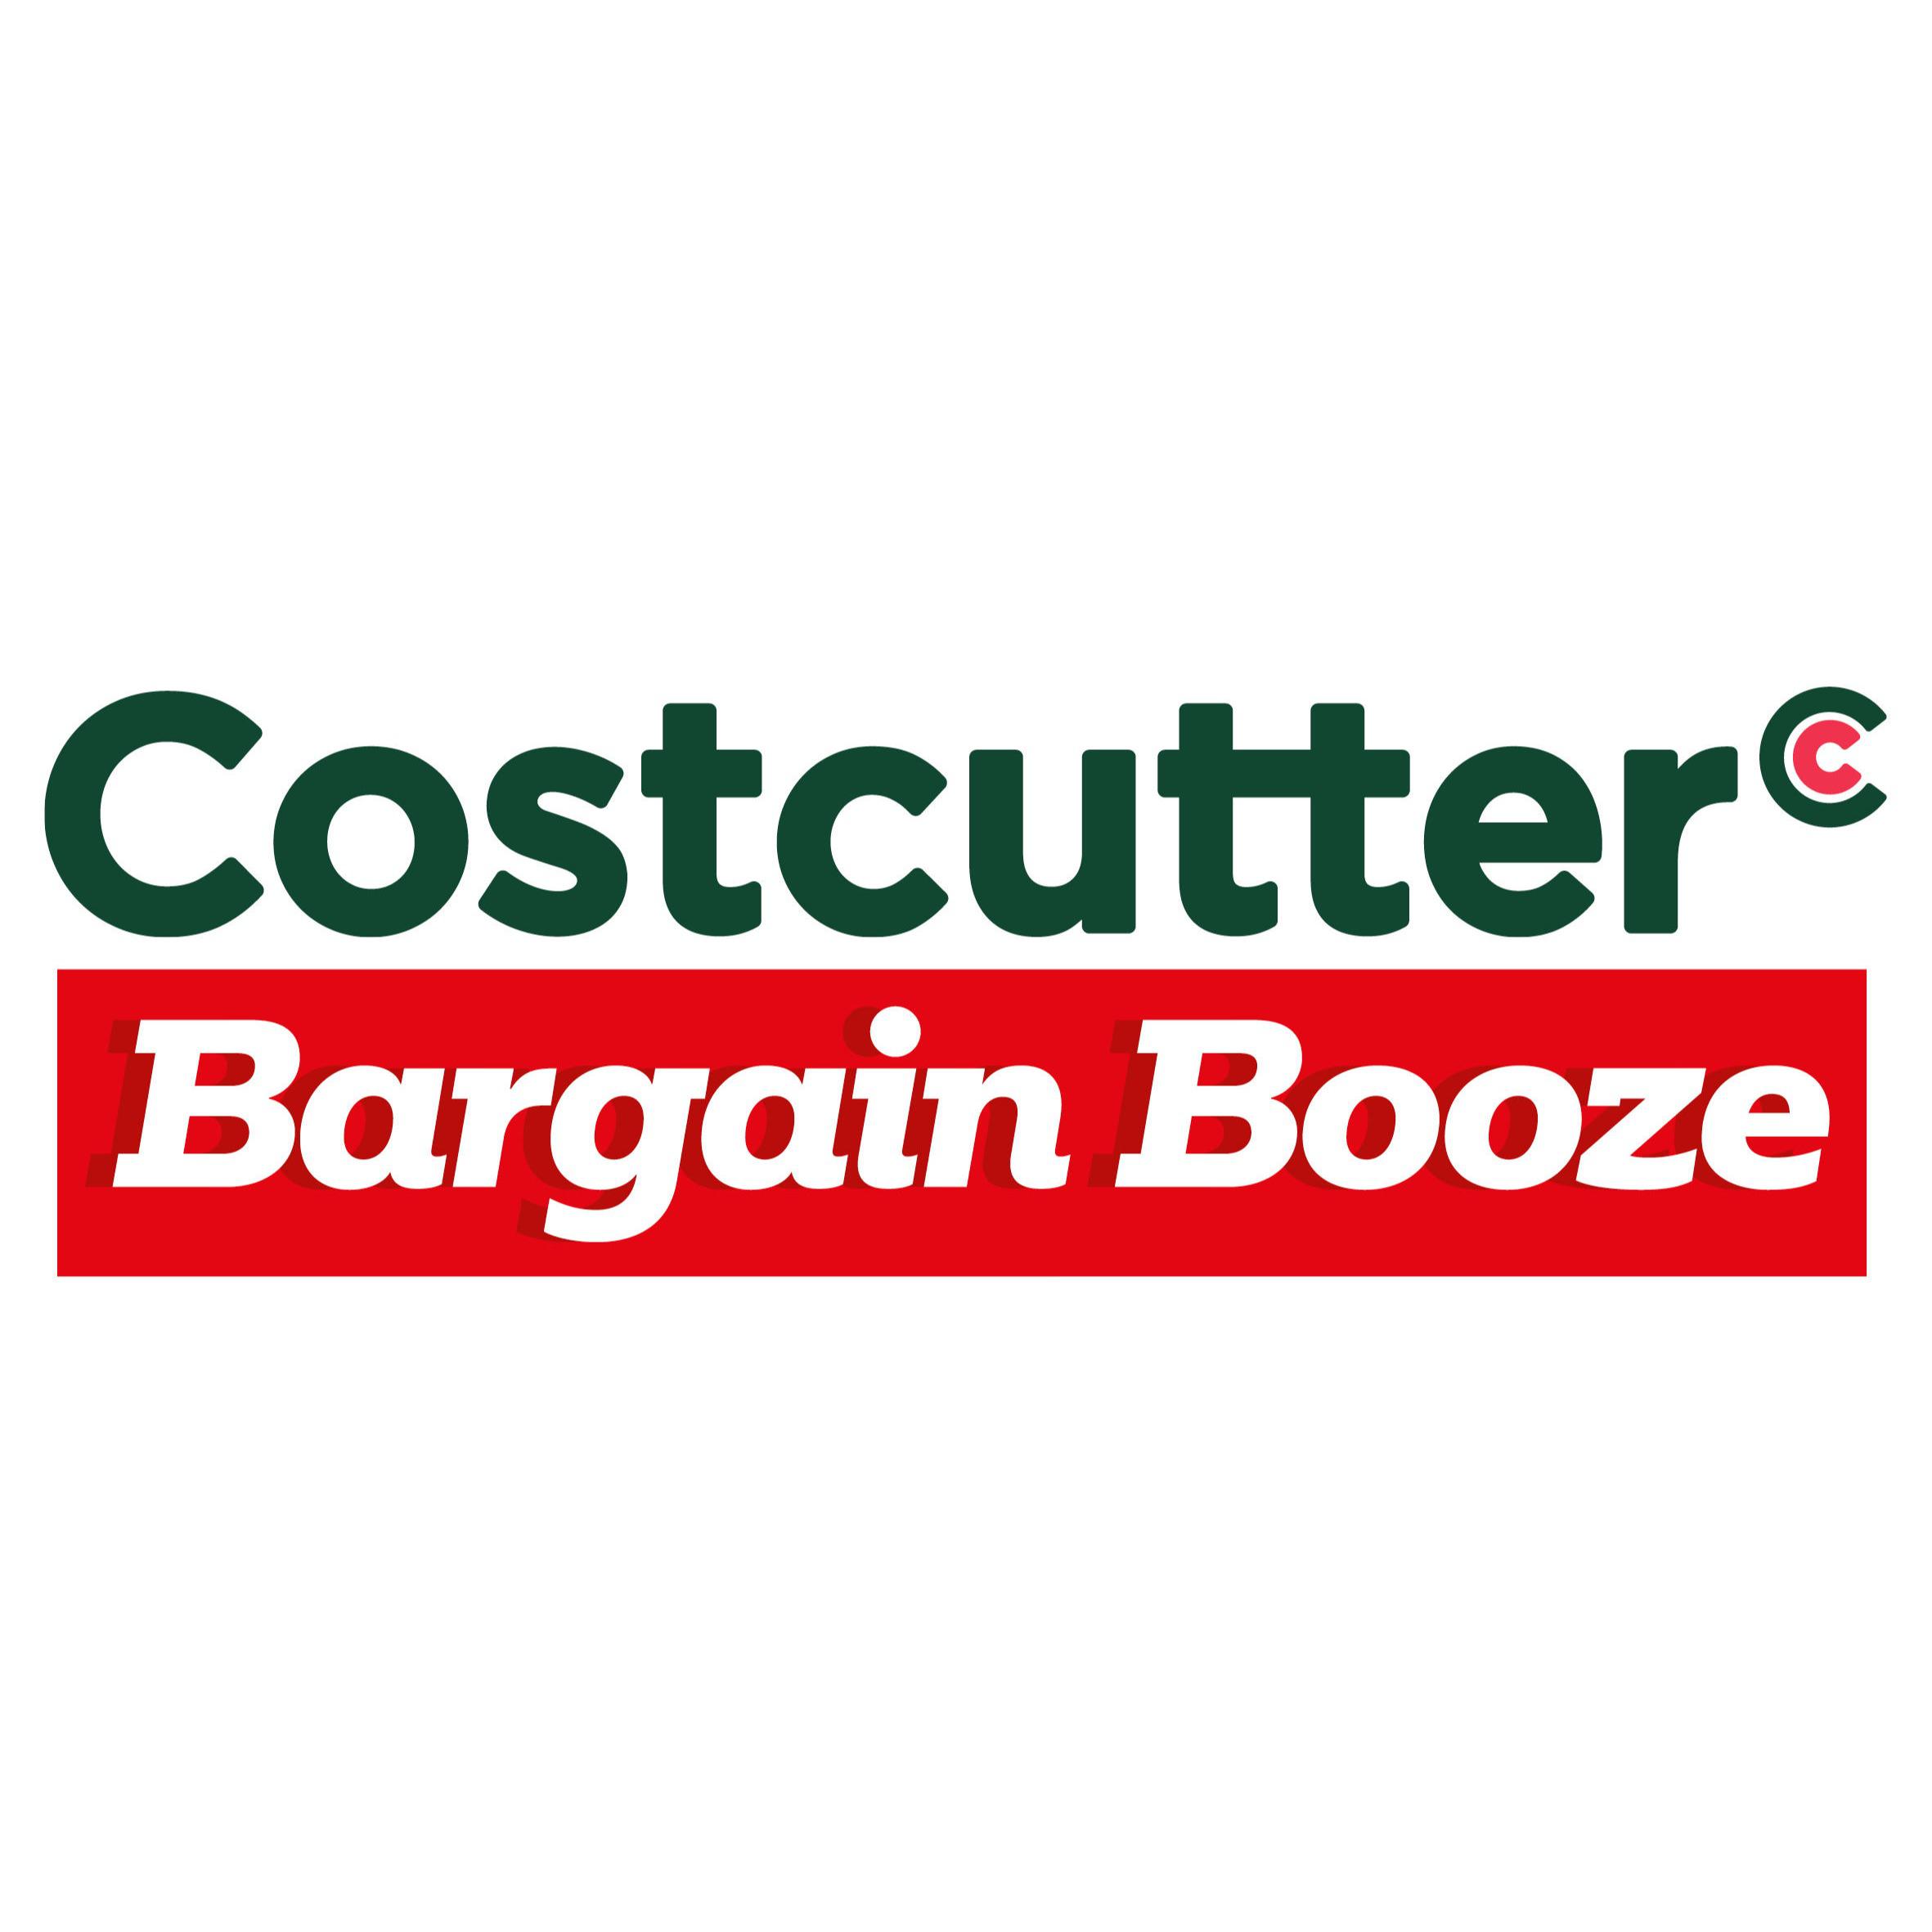 Costcutter featuring Bargain Booze - Bolton, Lancashire BL4 8PZ - 01204 861600 | ShowMeLocal.com